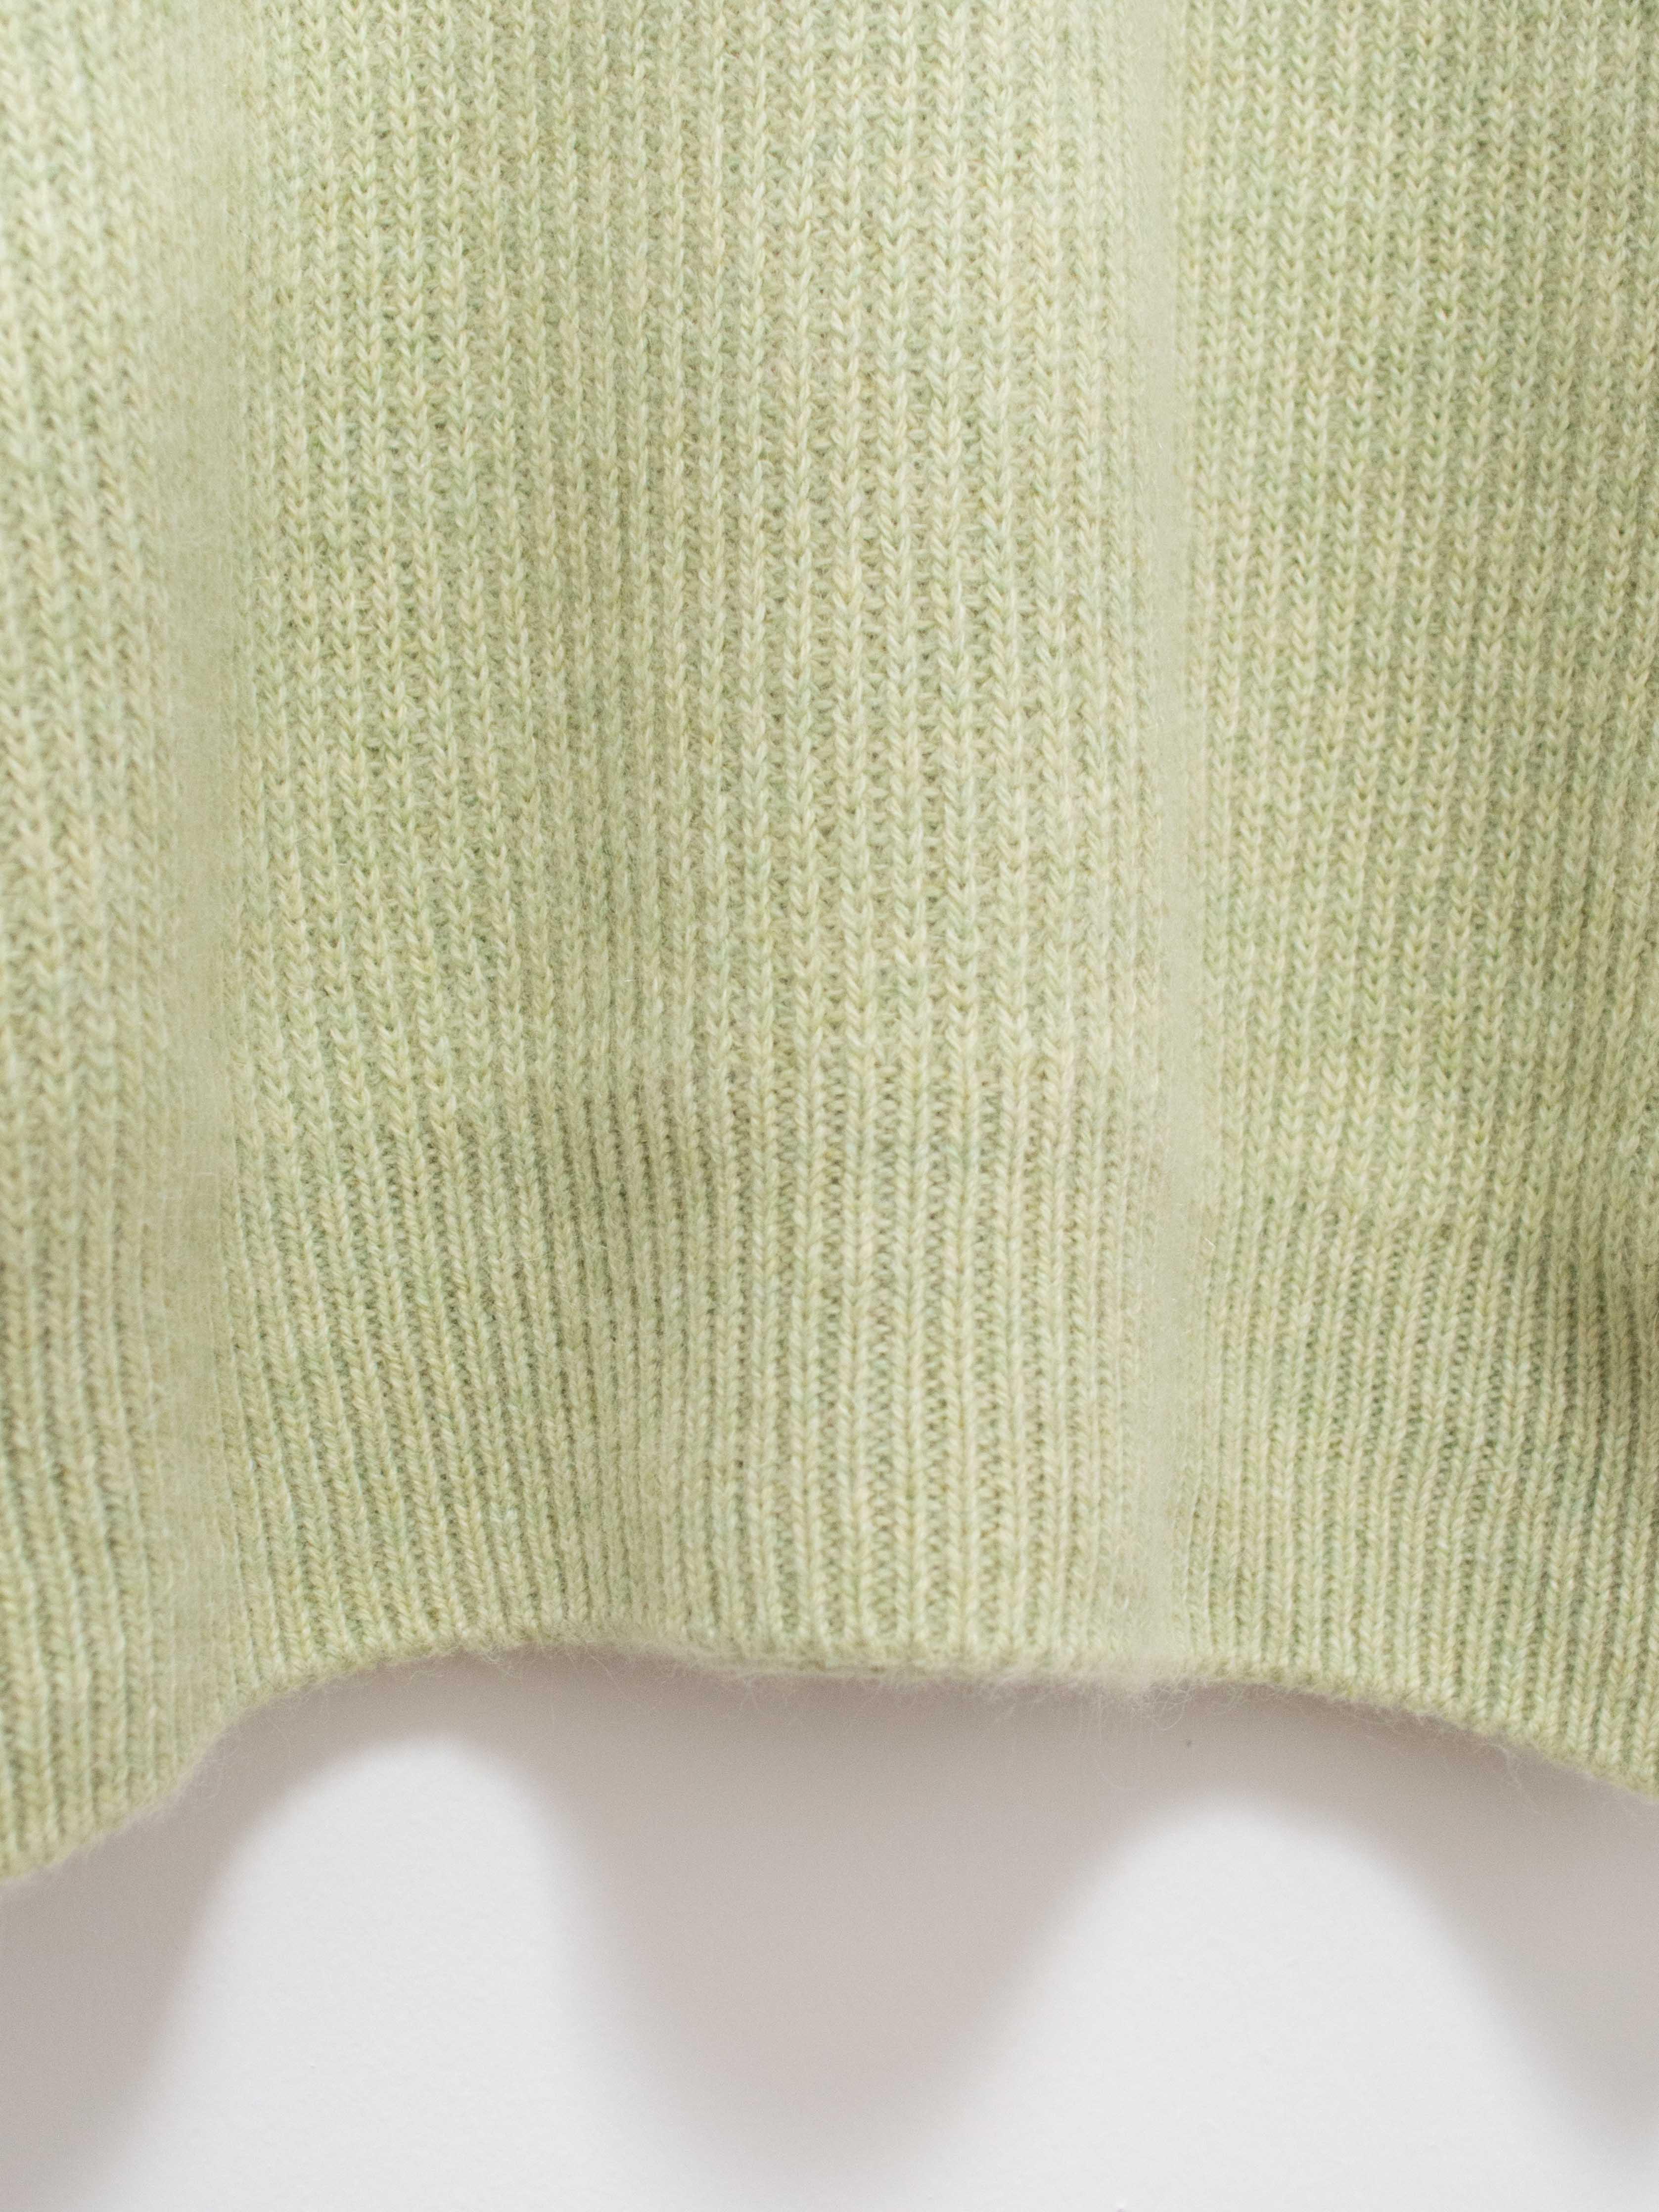 Namu Shop - Unfil Royal Baby Alpaca Sweater - Light Green